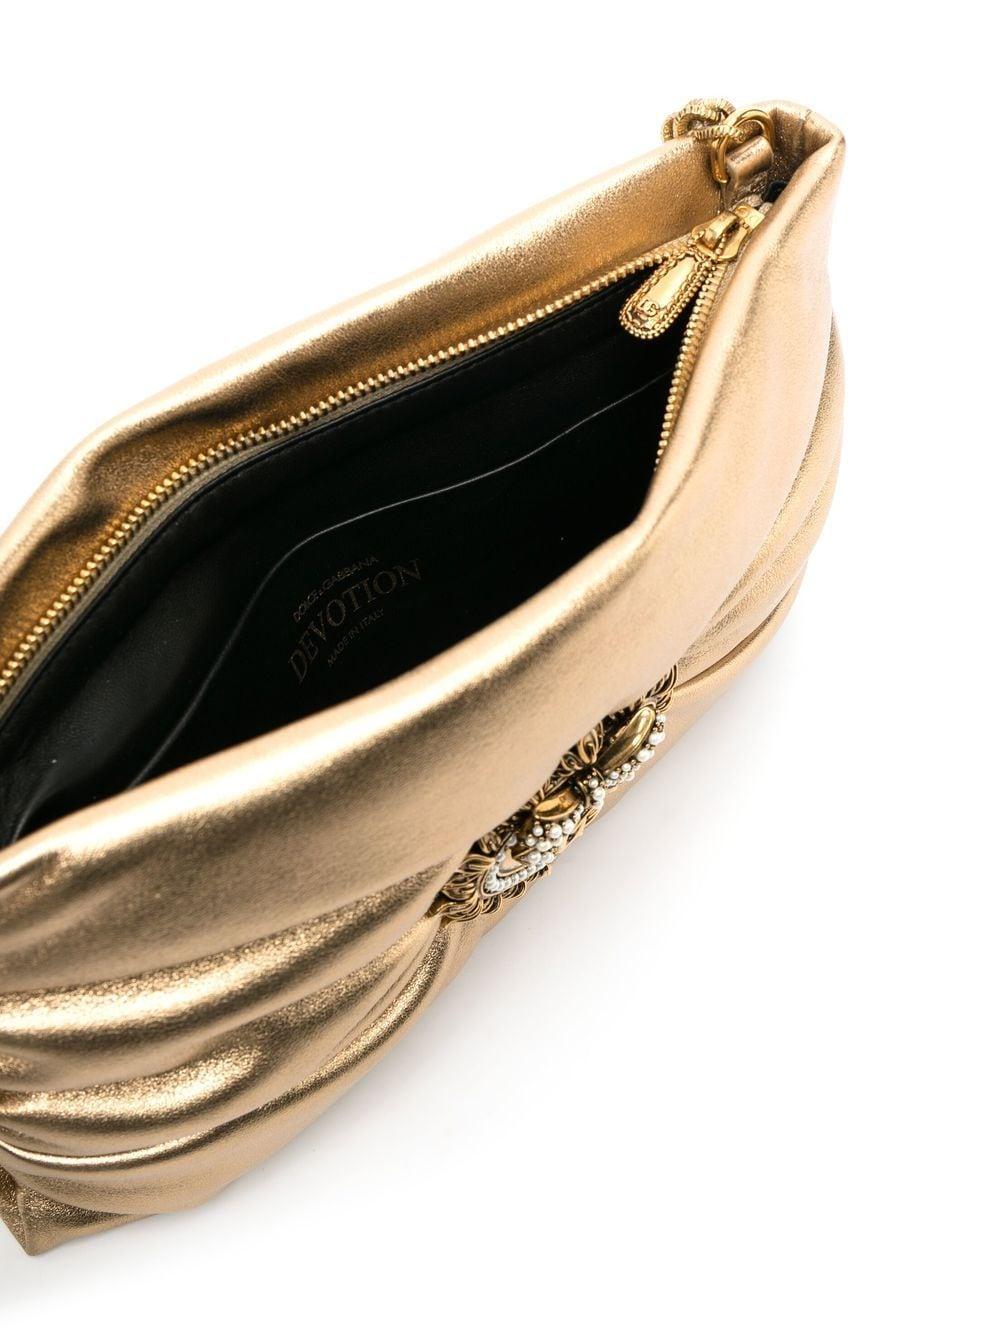 Dolce&Gabbana Women's Large Devotion Quilted Leather Shoulder Bag - Nero